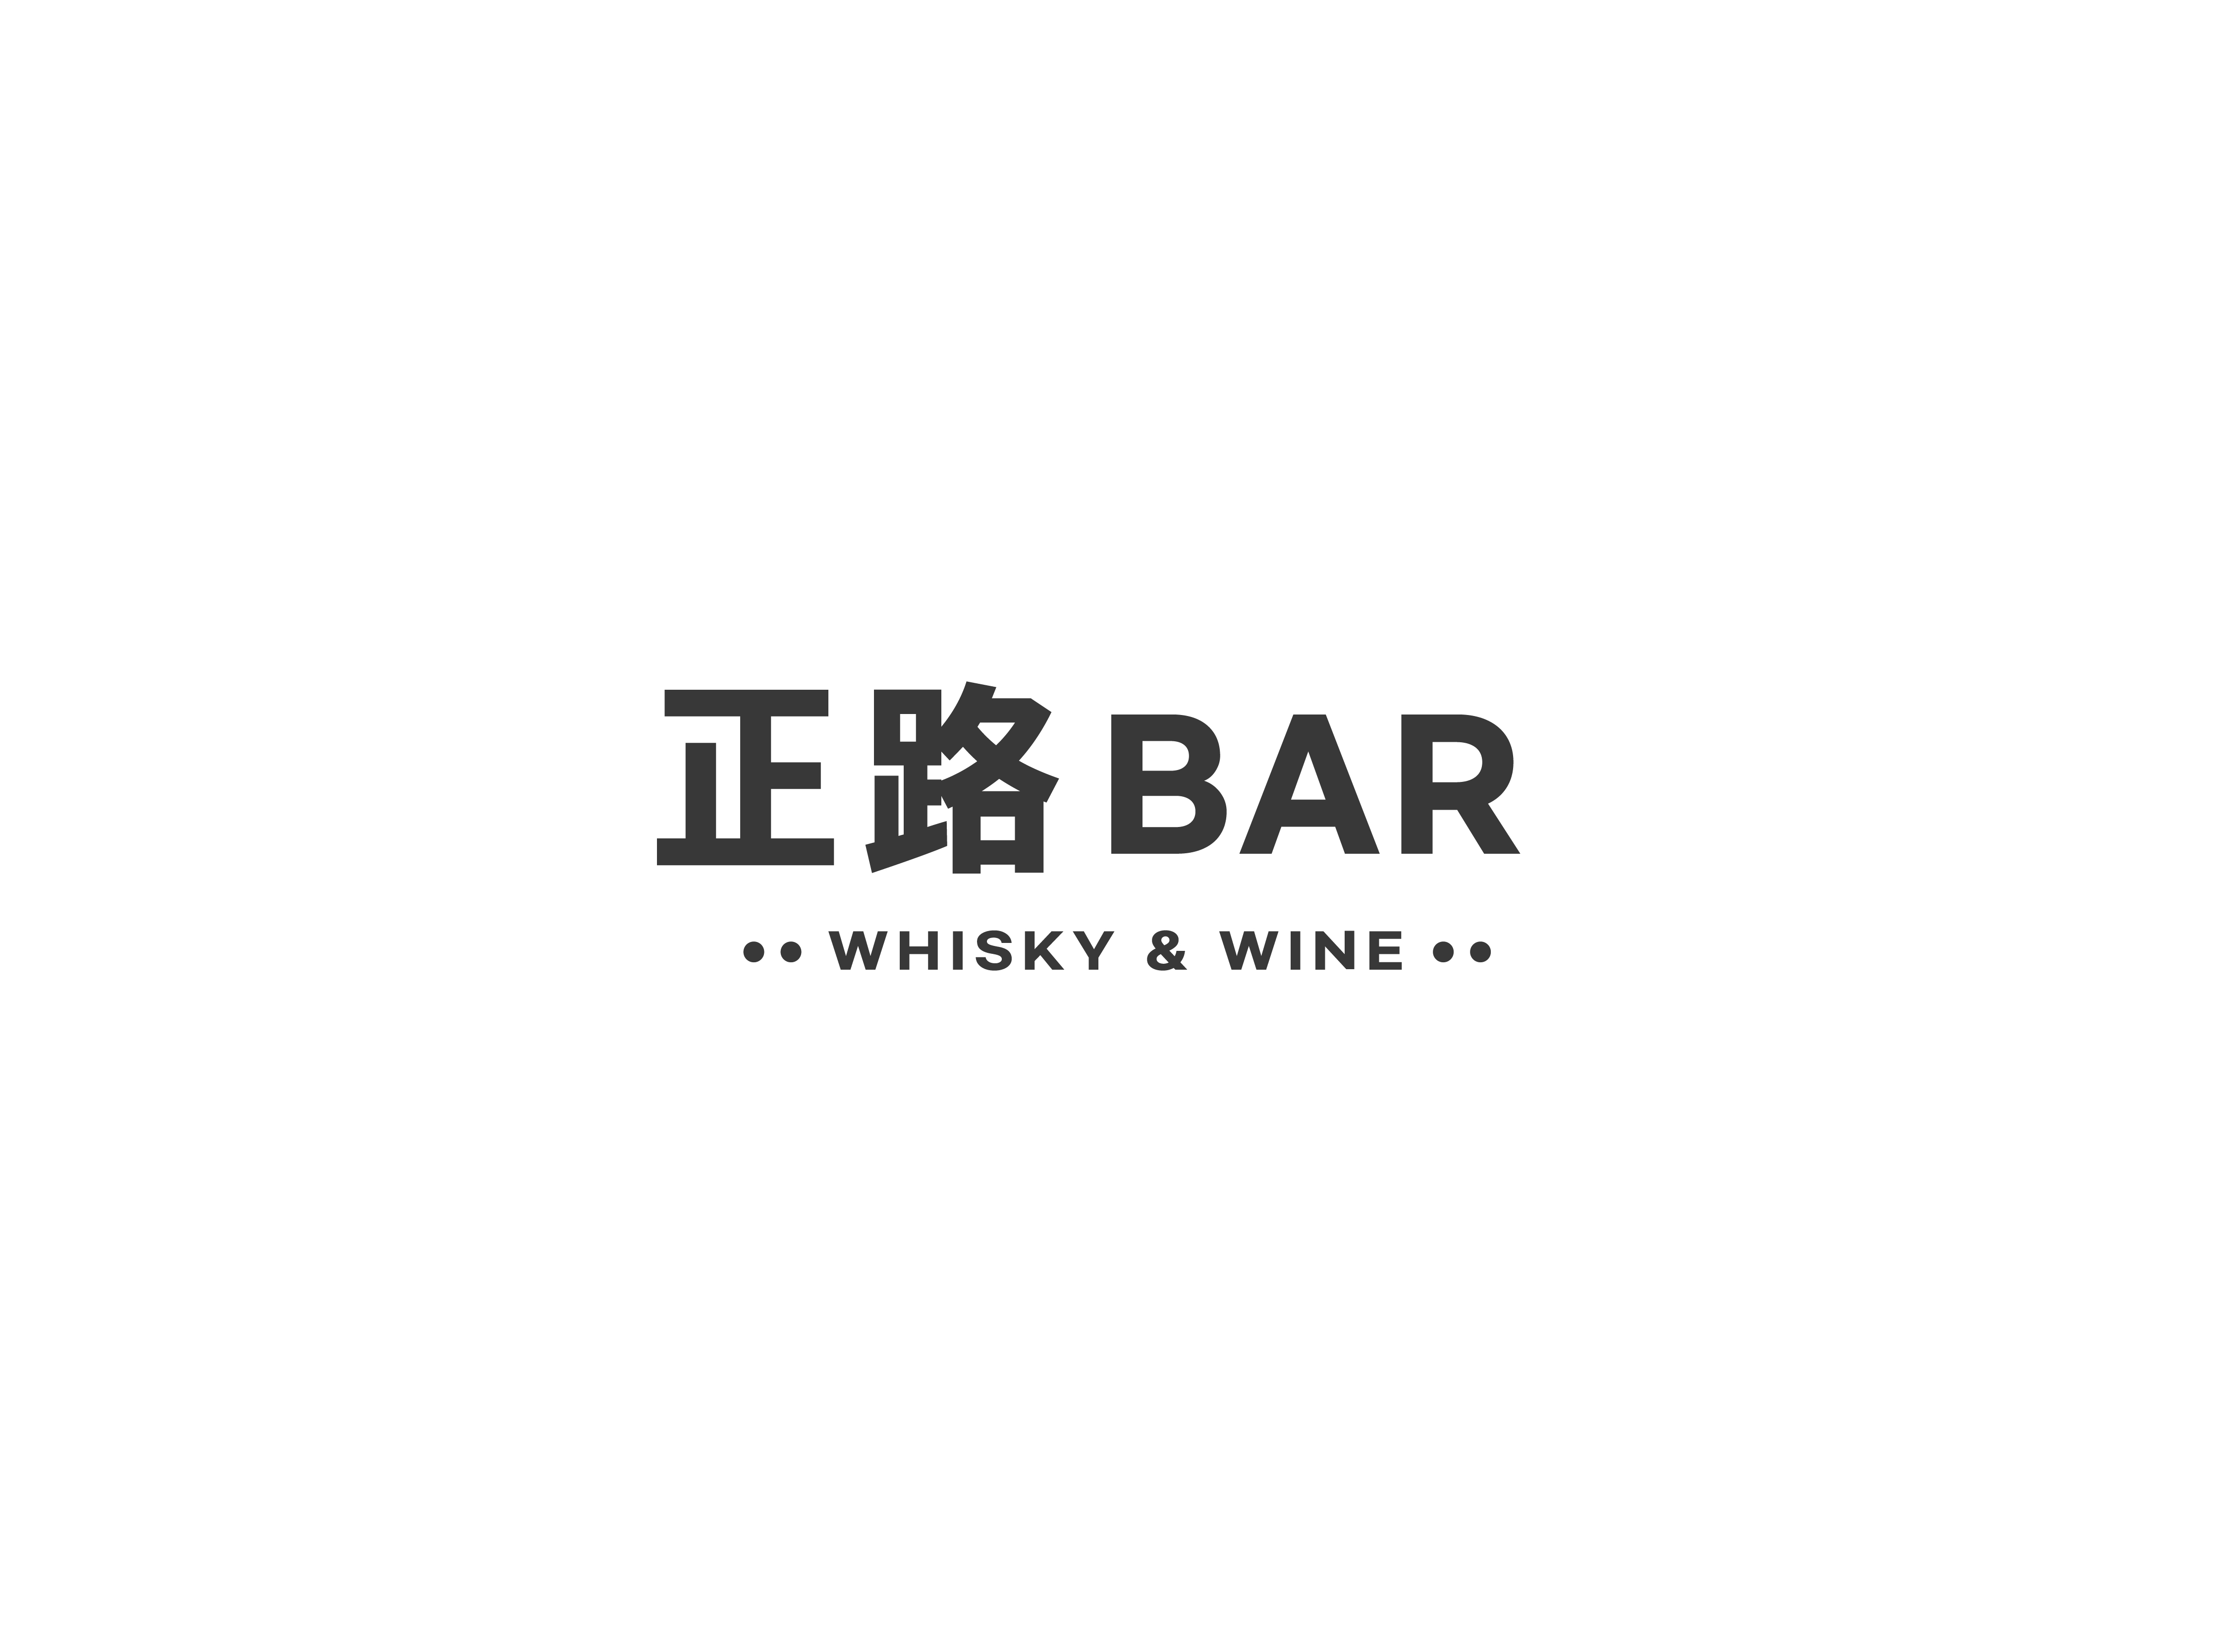 JR Bar